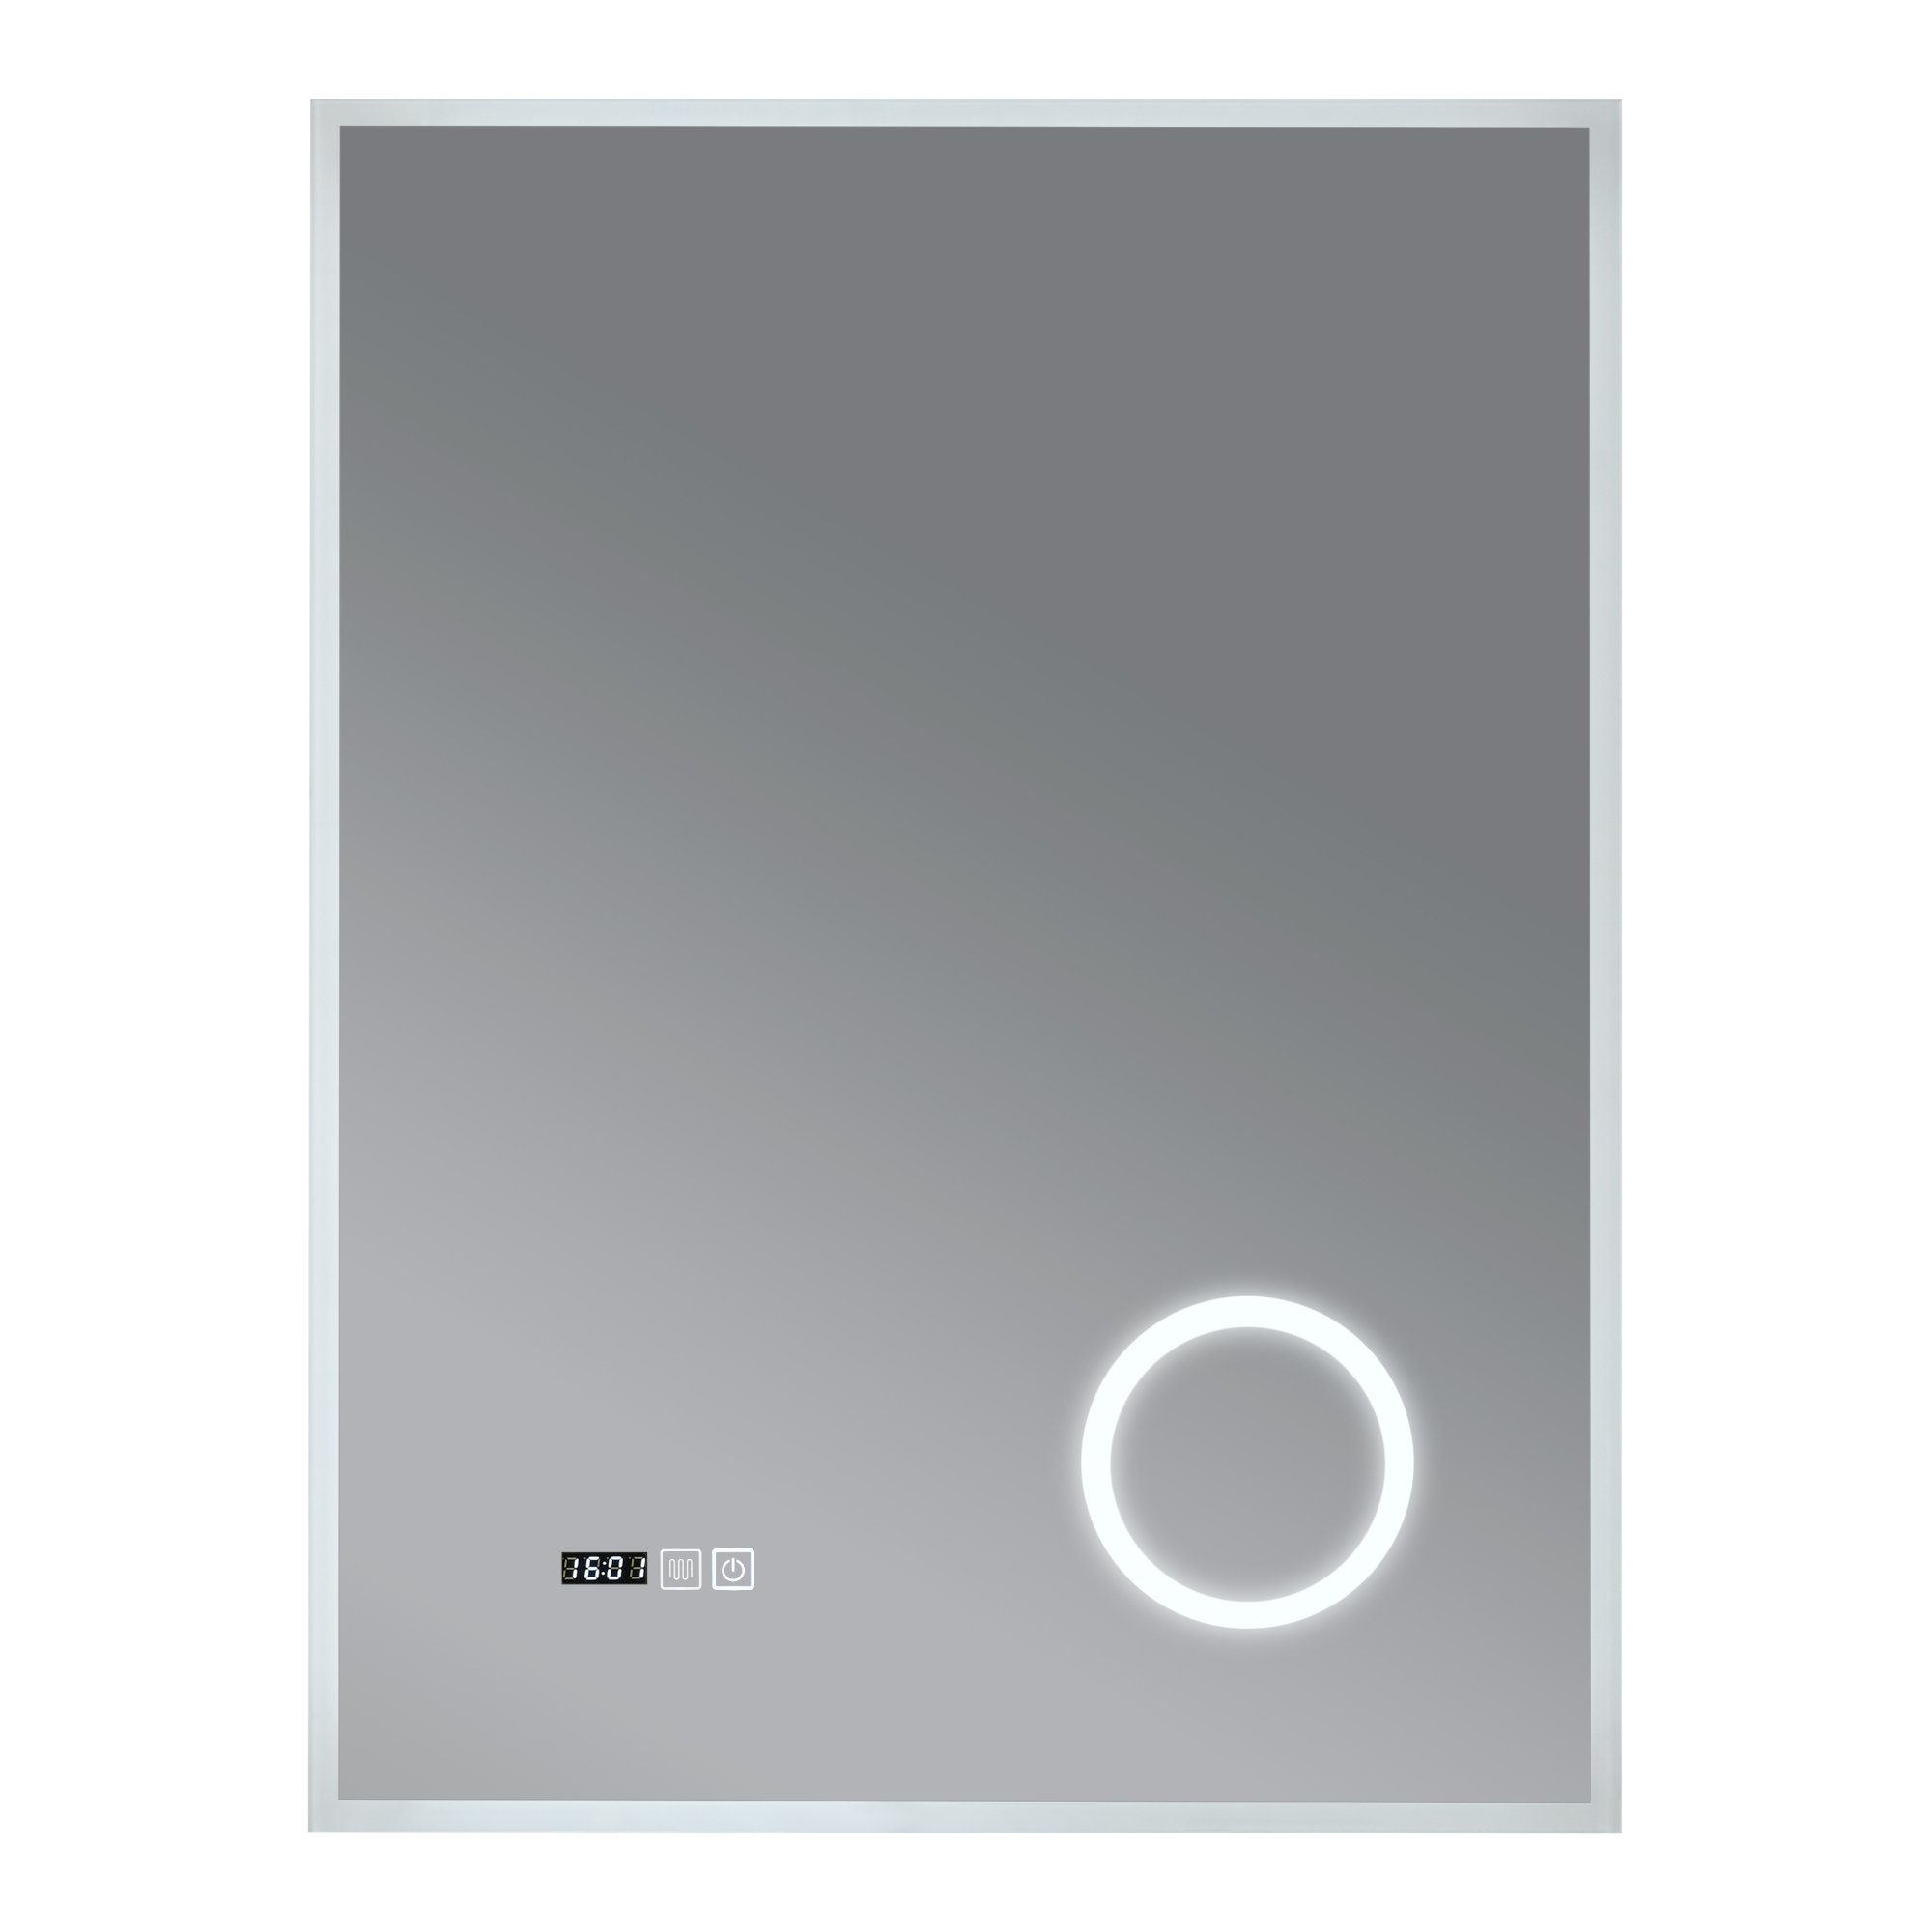 cm »Lizzano« pro.tec x 50 120 70 mit LEDs Badspiegel, Weiß Aluminiumrahmen